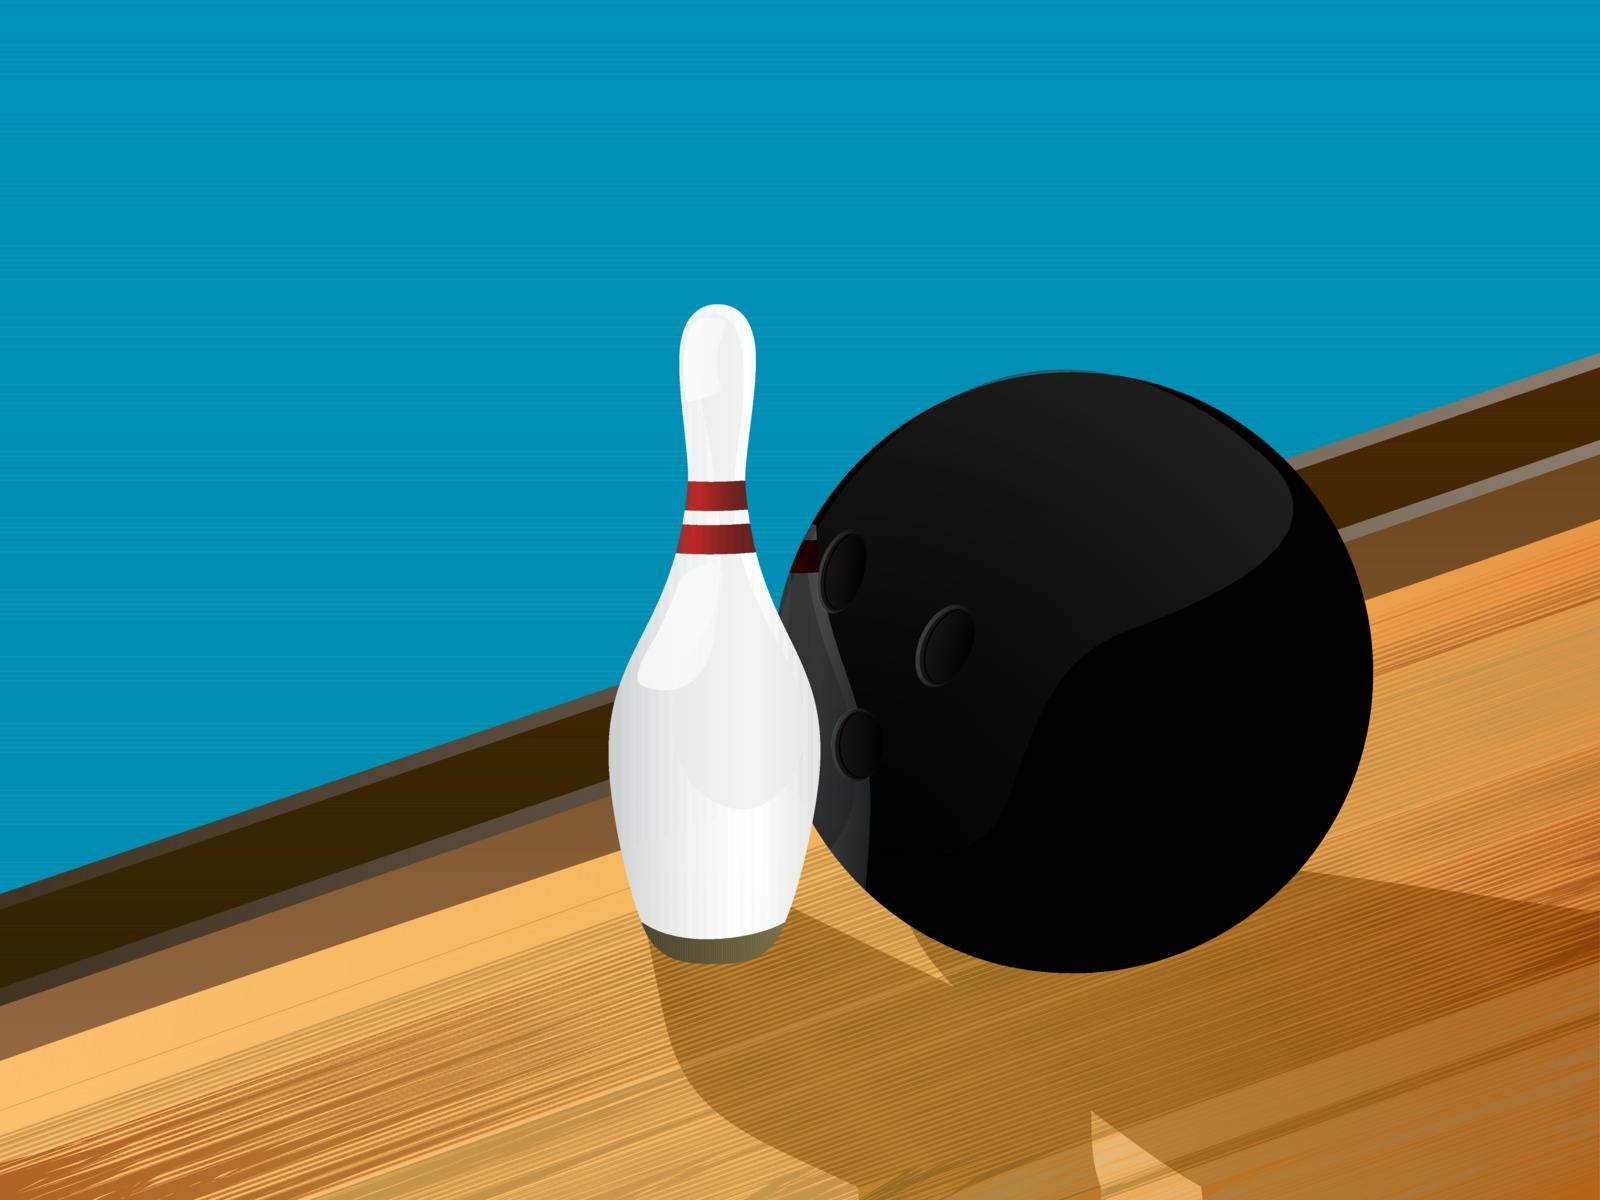 Bowling illustration by Lirch